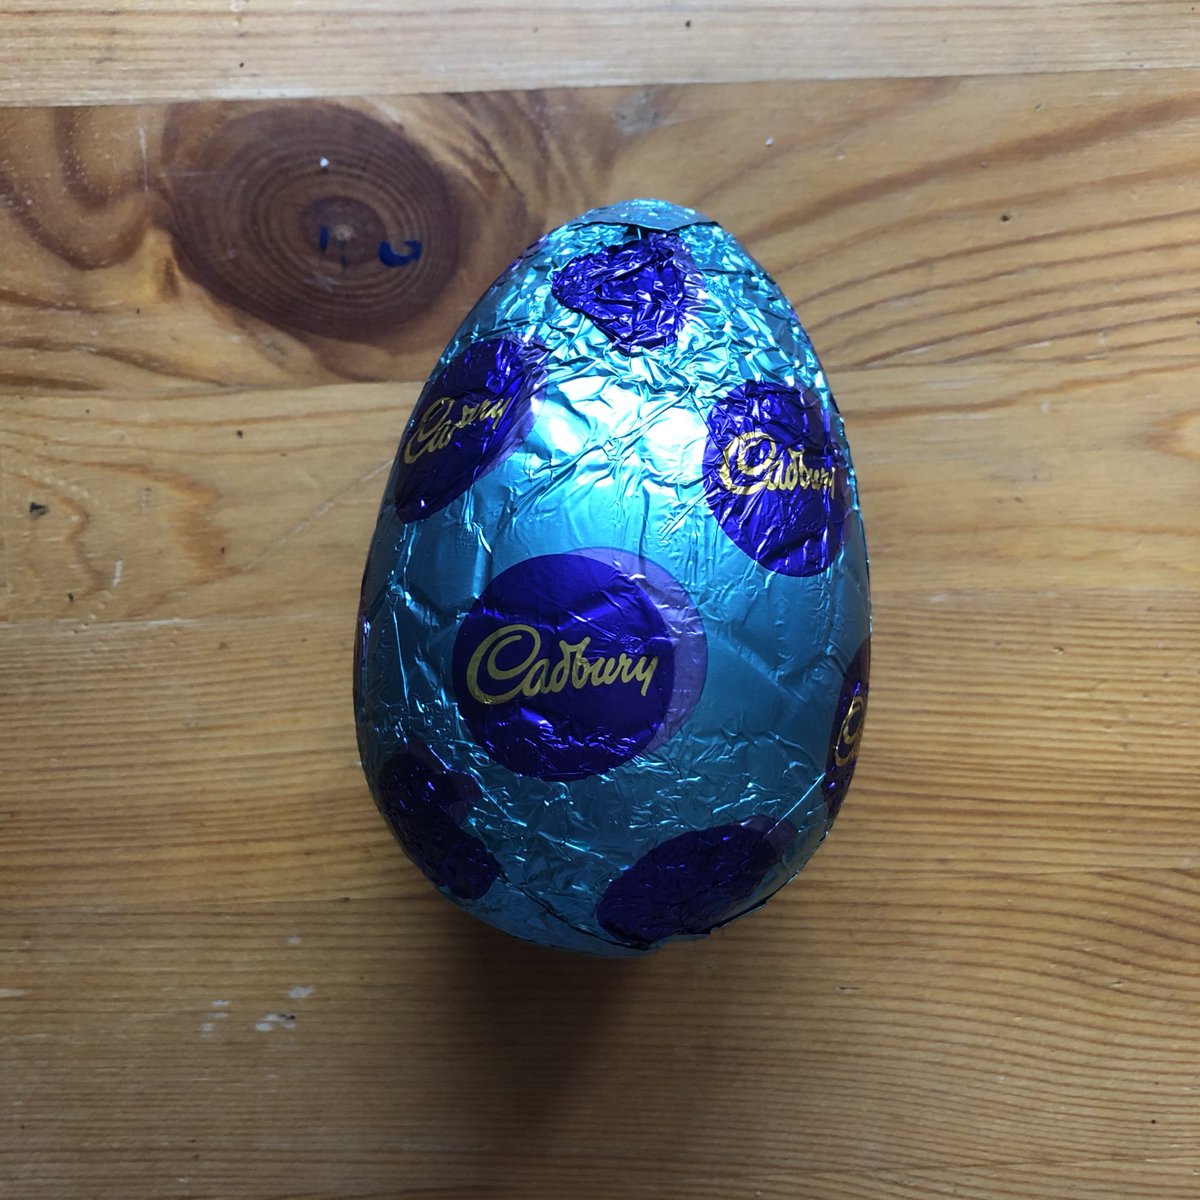 Large Egg- I buy these and take them to work and enjoy smashing them.